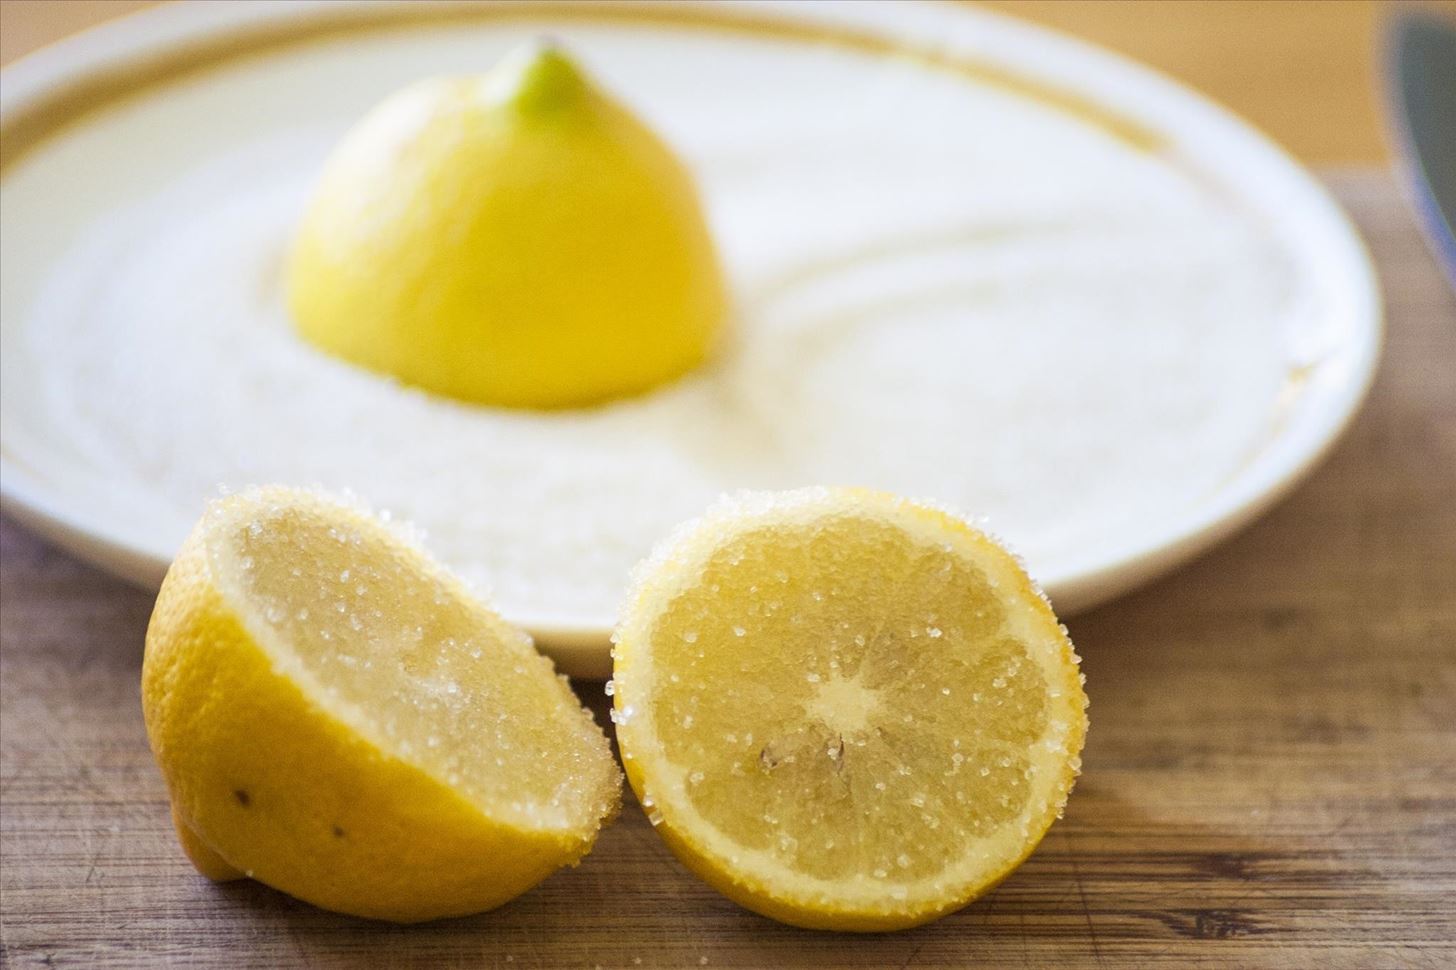 How to Make Grilled Lemonade, the Ultimate Summer Drink